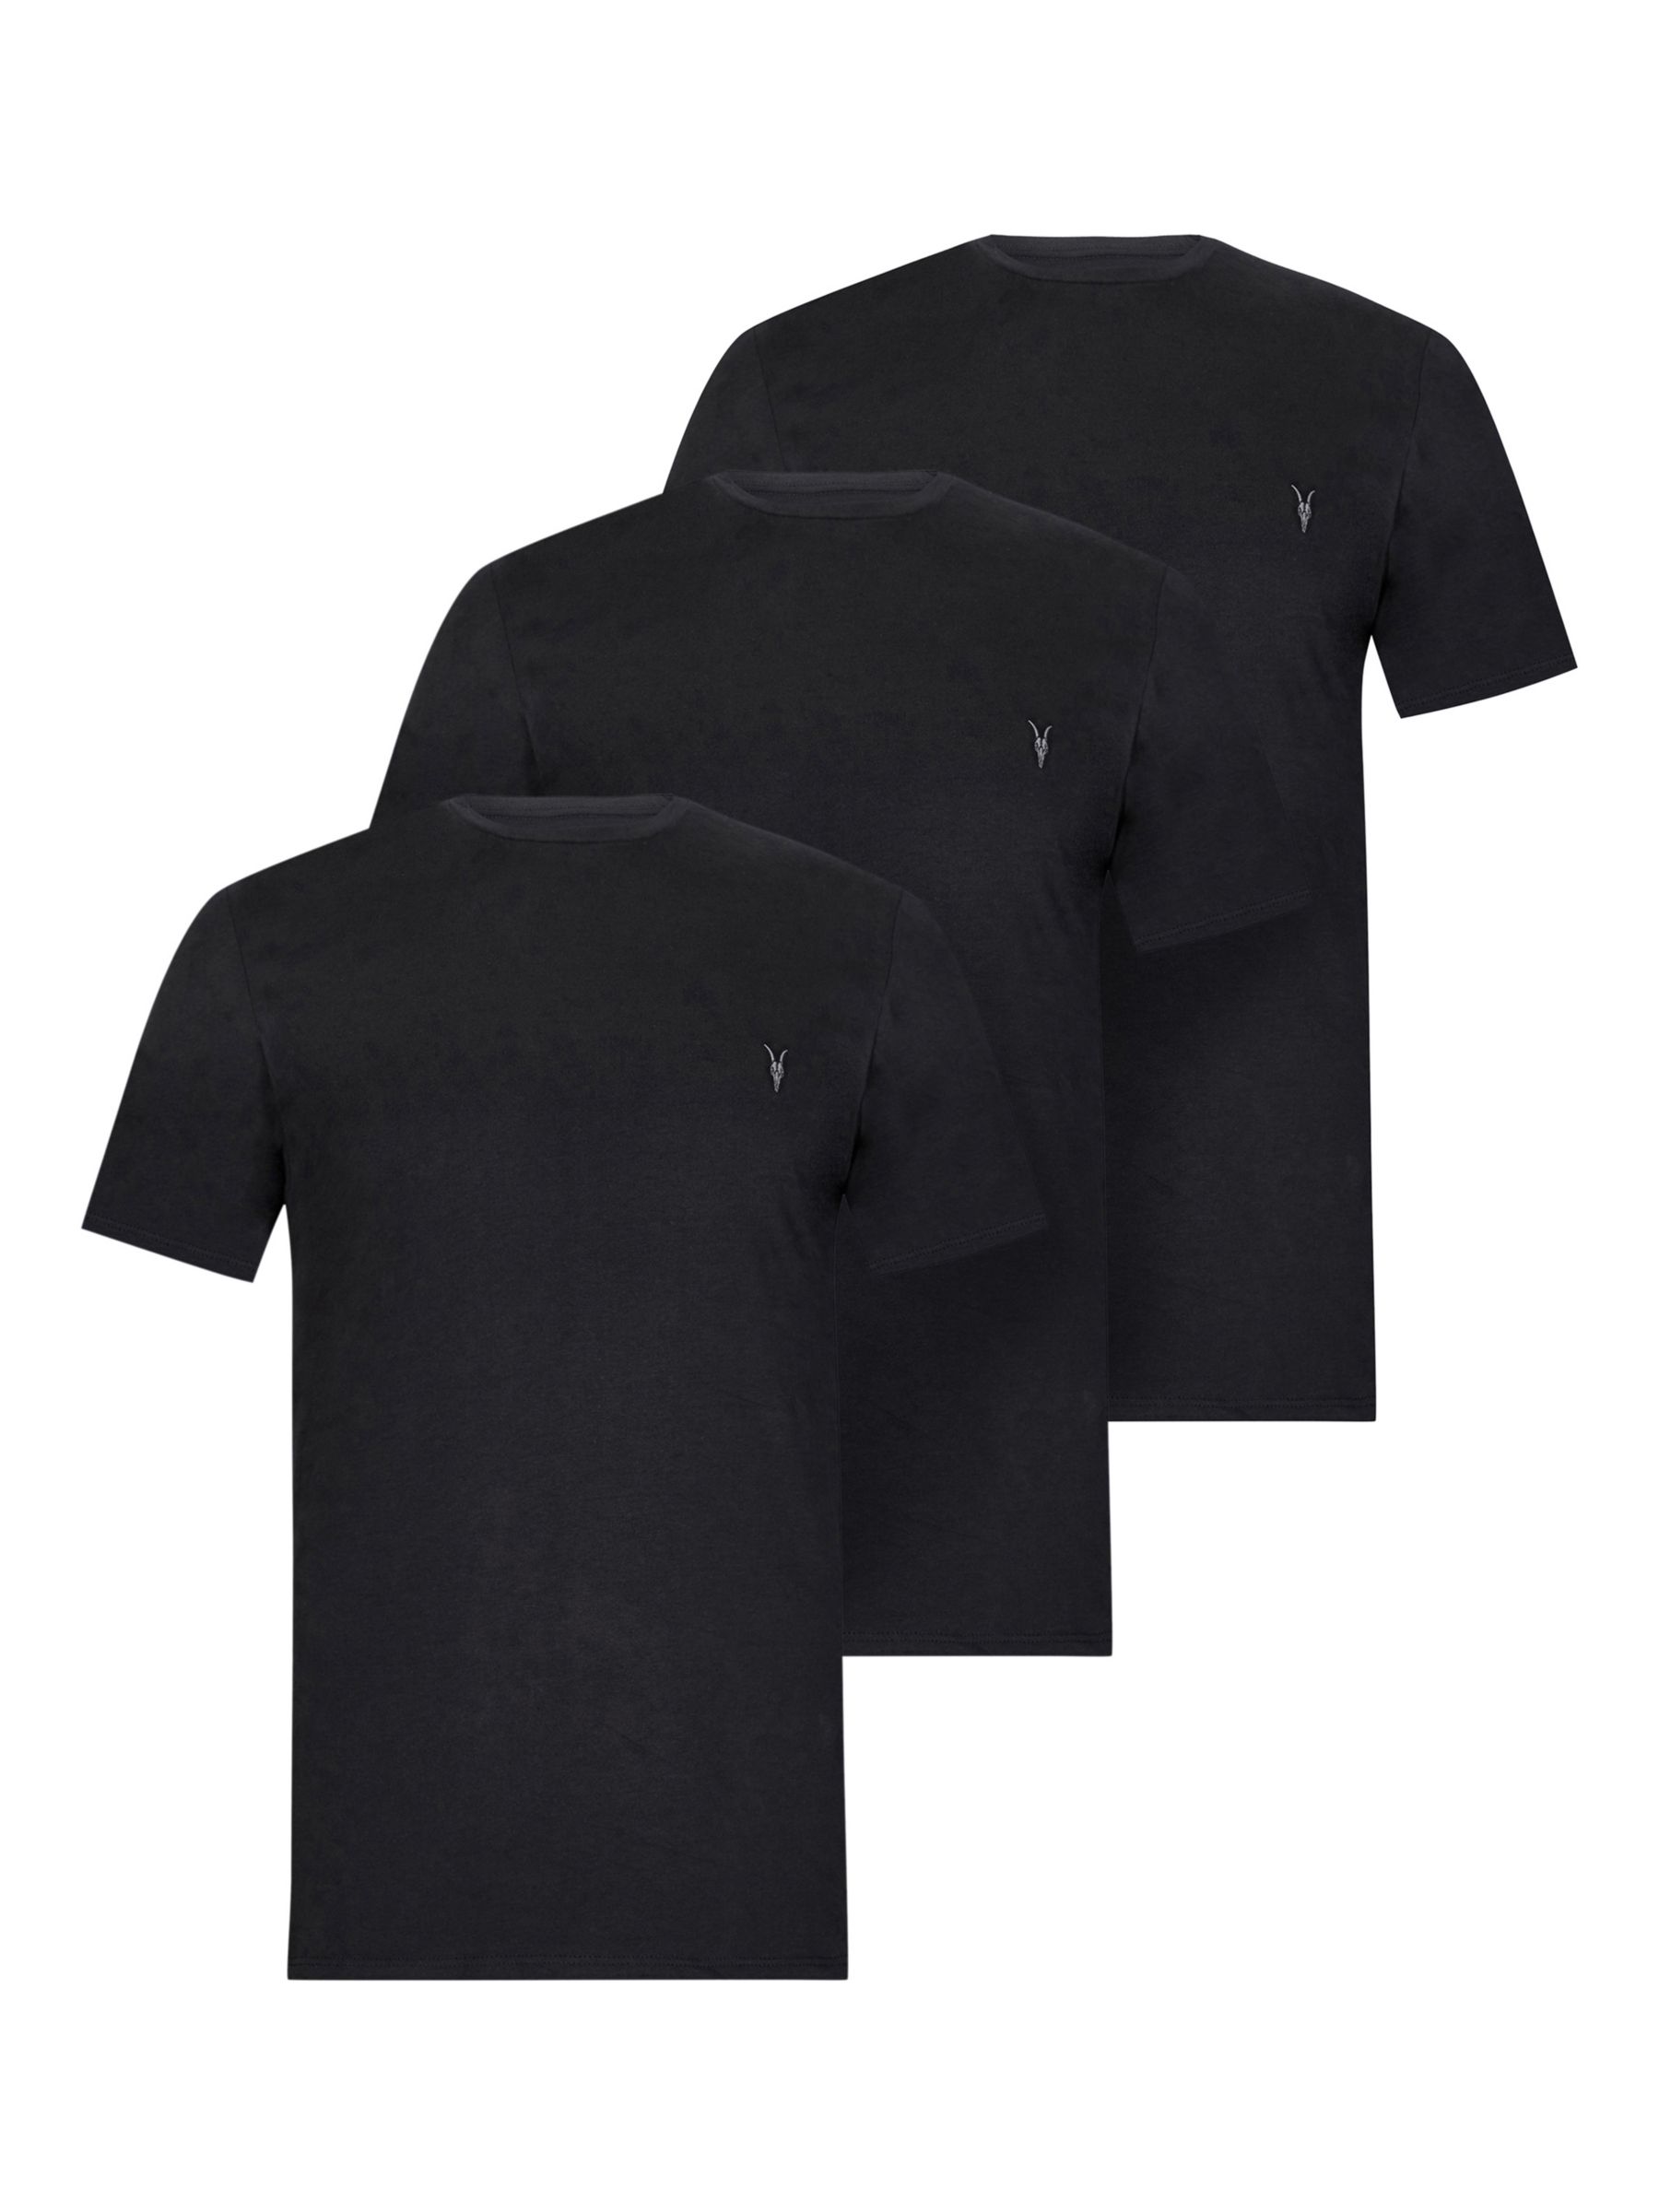 AllSaints Brace Tonic Crew Neck T-Shirts, Pack of 3, Black, XS